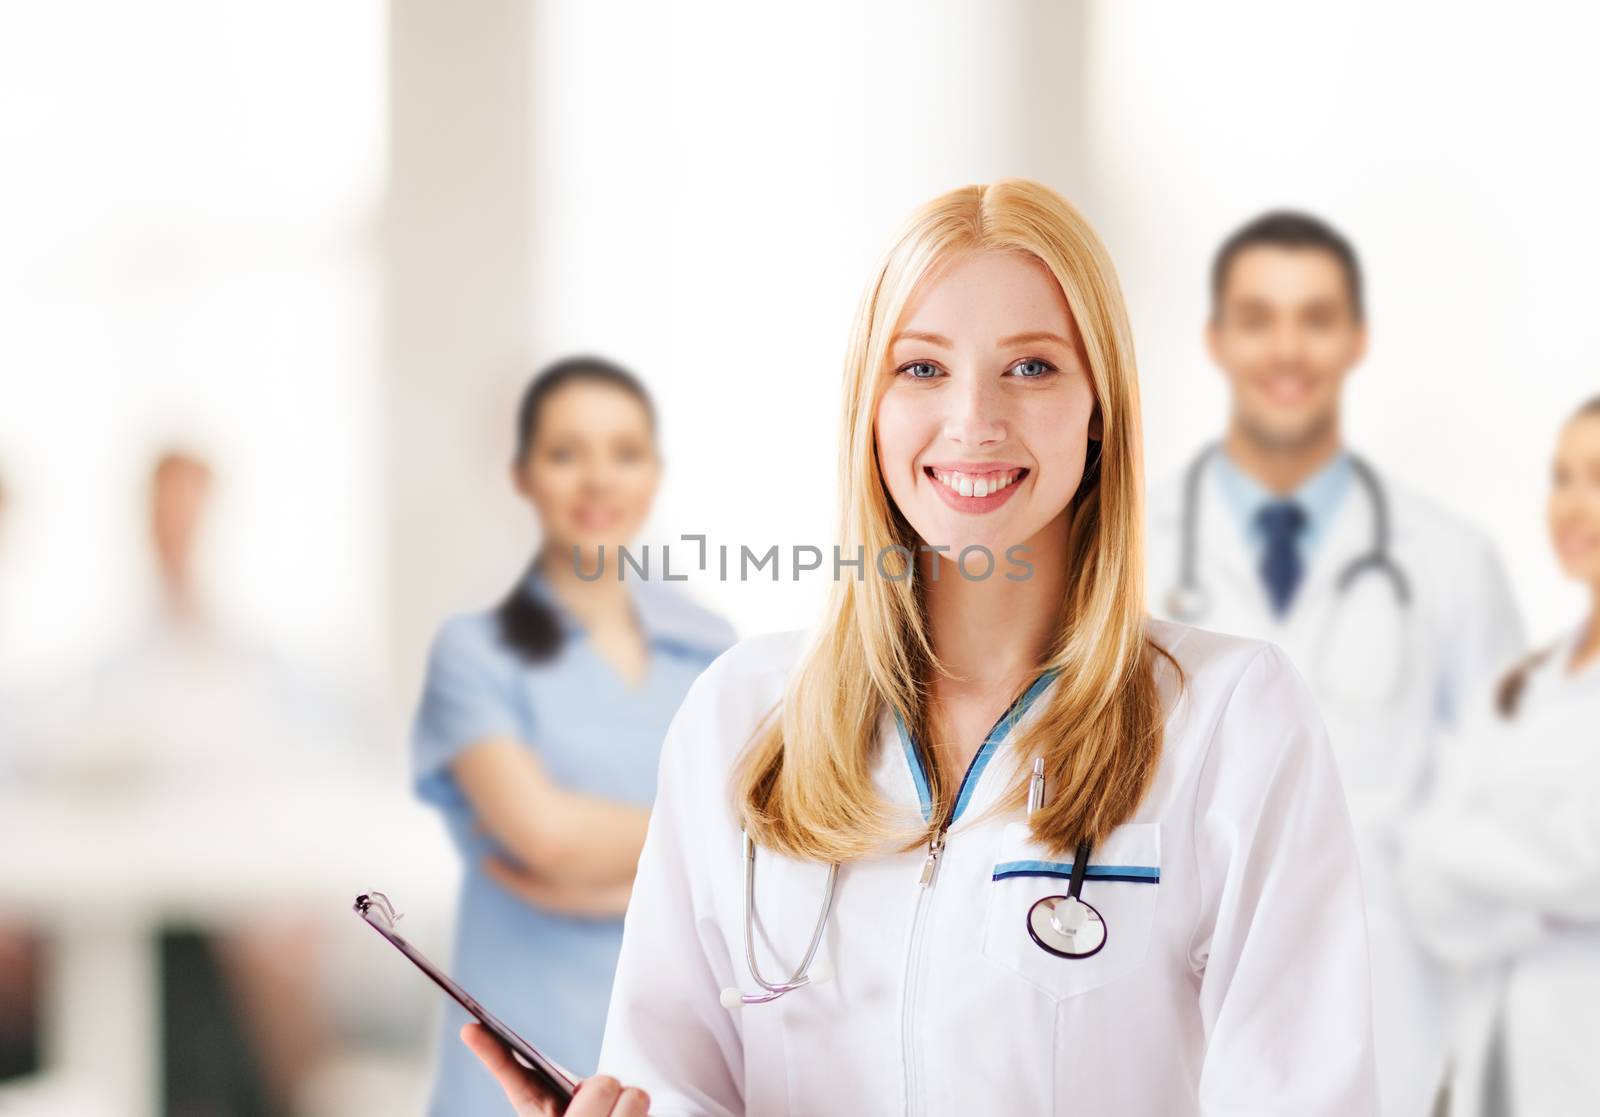 female doctor with stethoscope by dolgachov